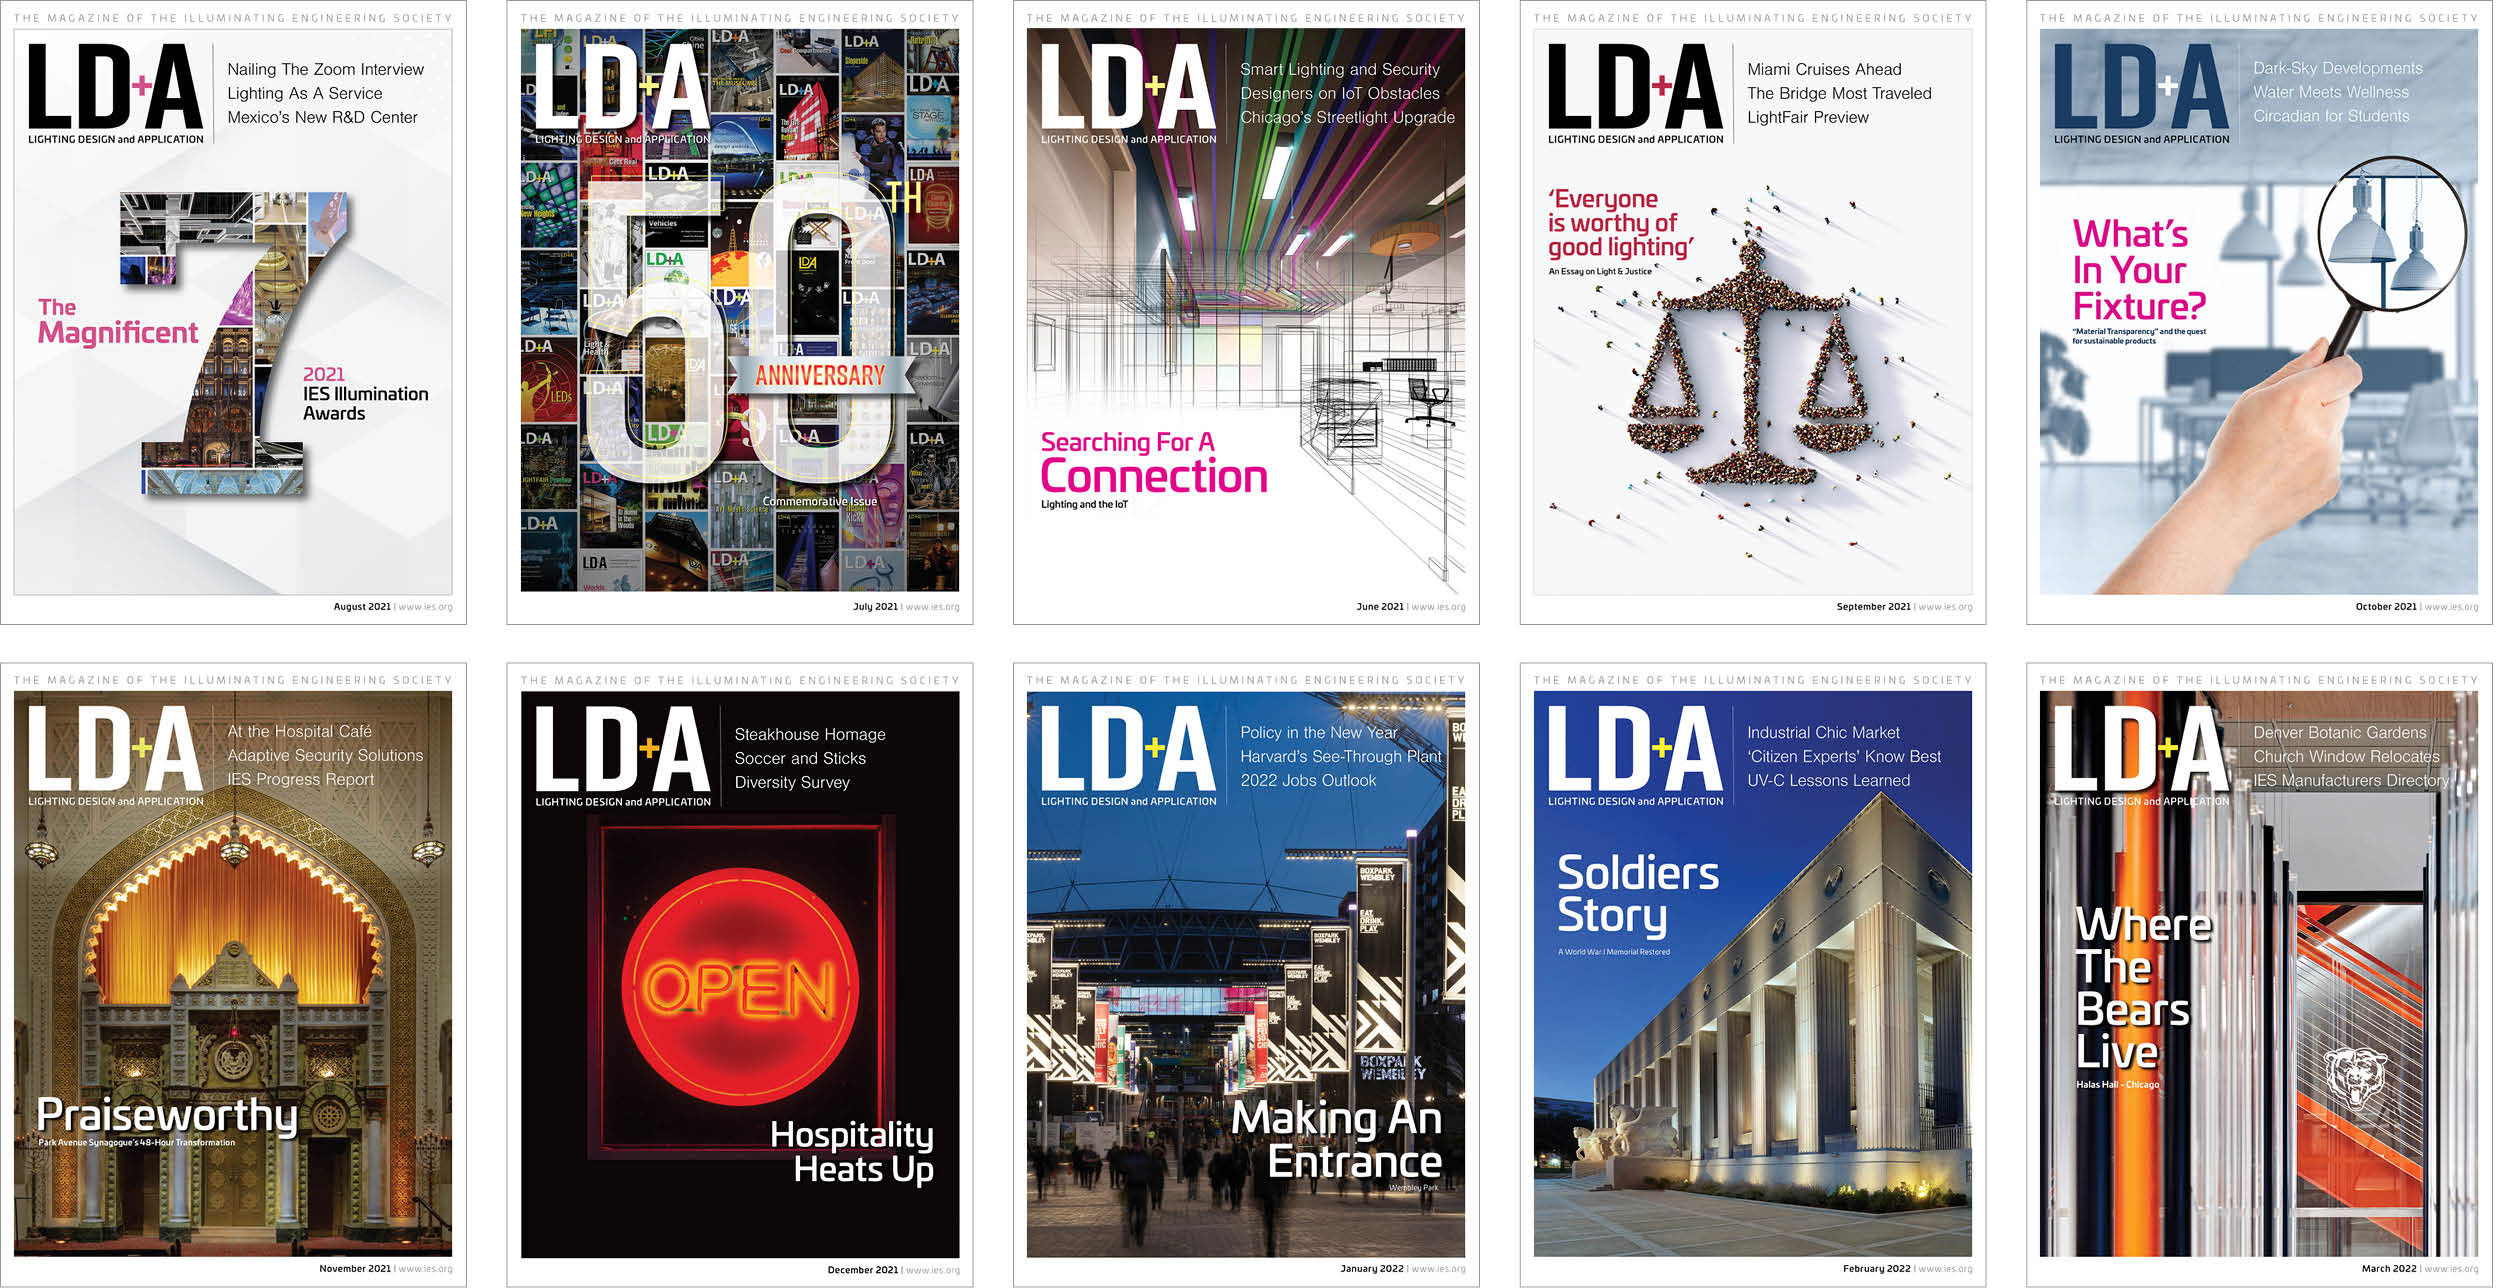 LD+A Magazine Covers